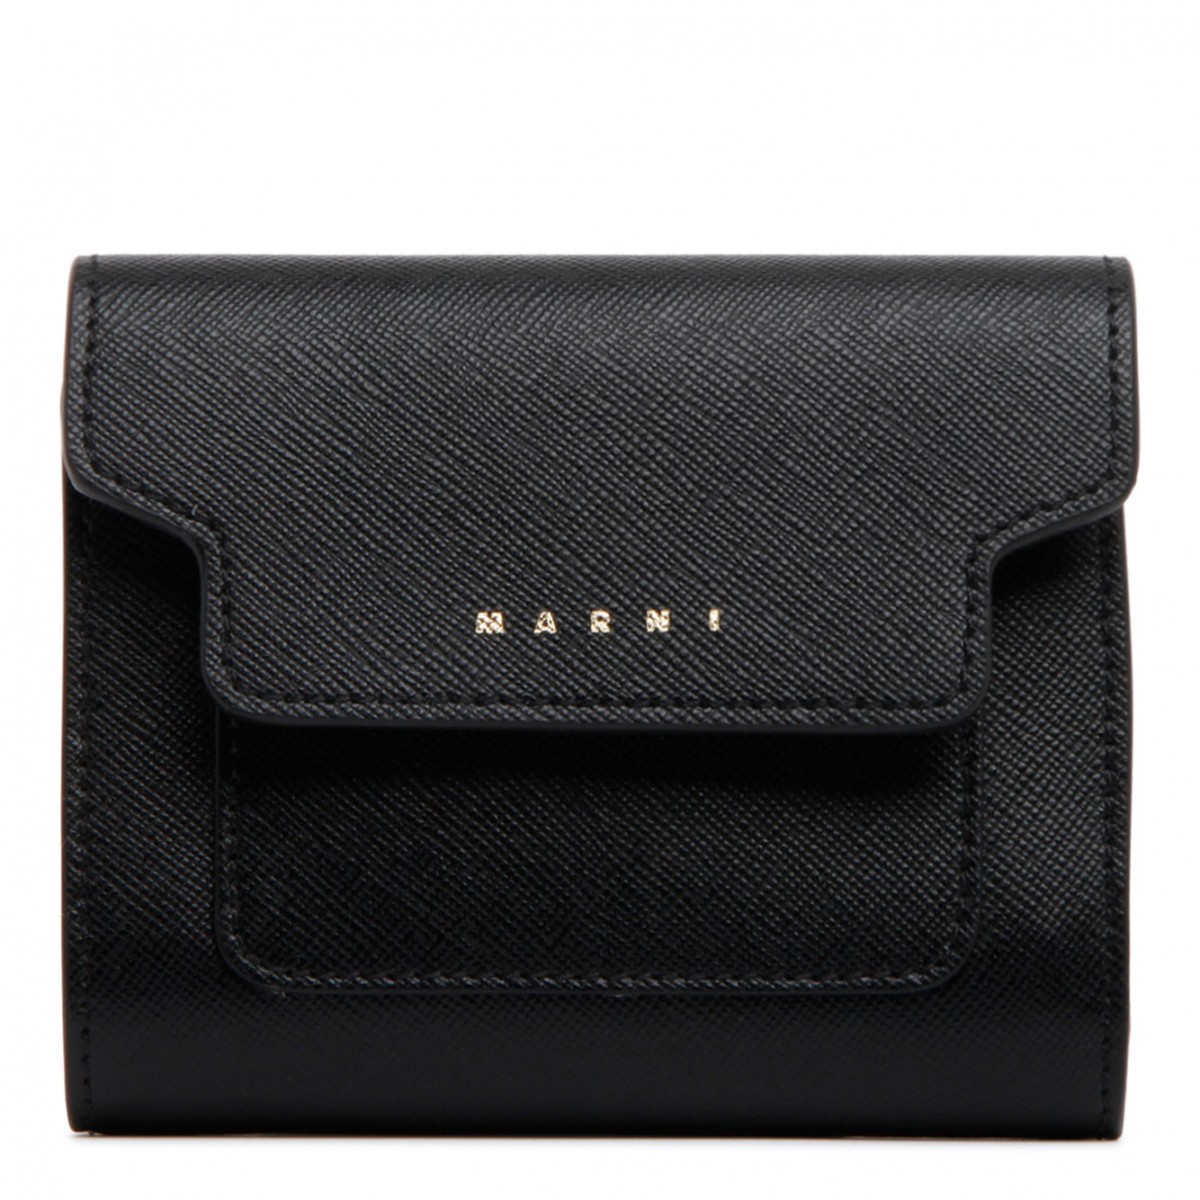 Marni Black Saffiano Leather Flat Wallet. 